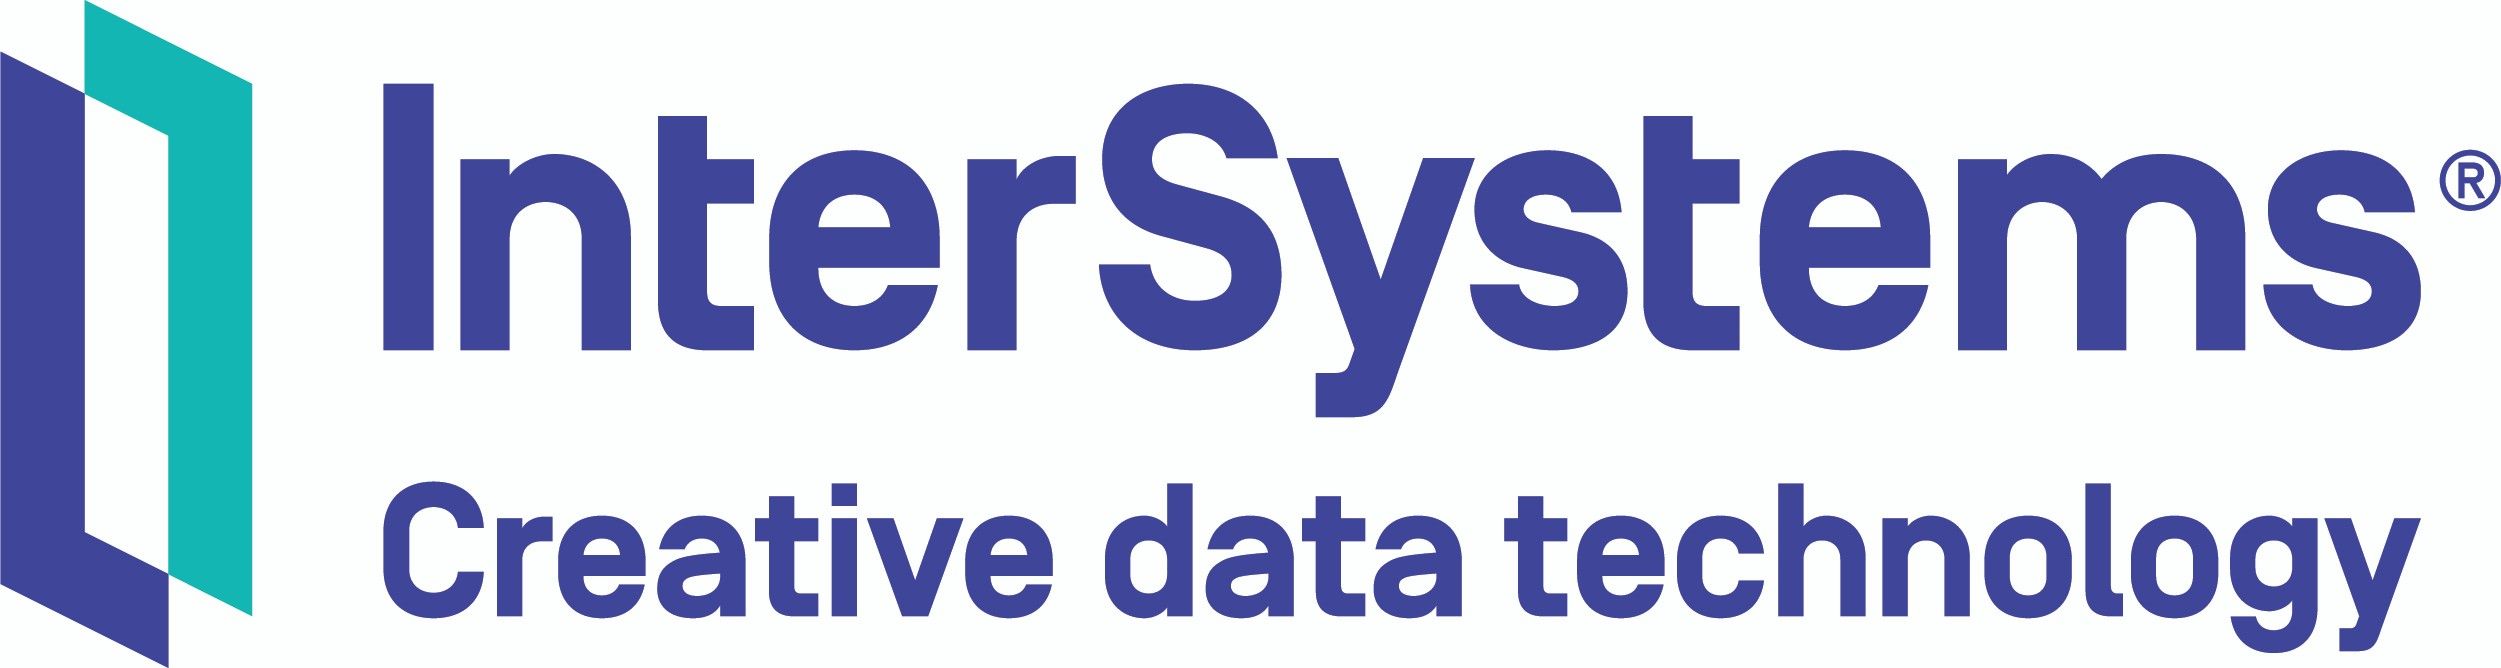 Intersystems Logo.jpg